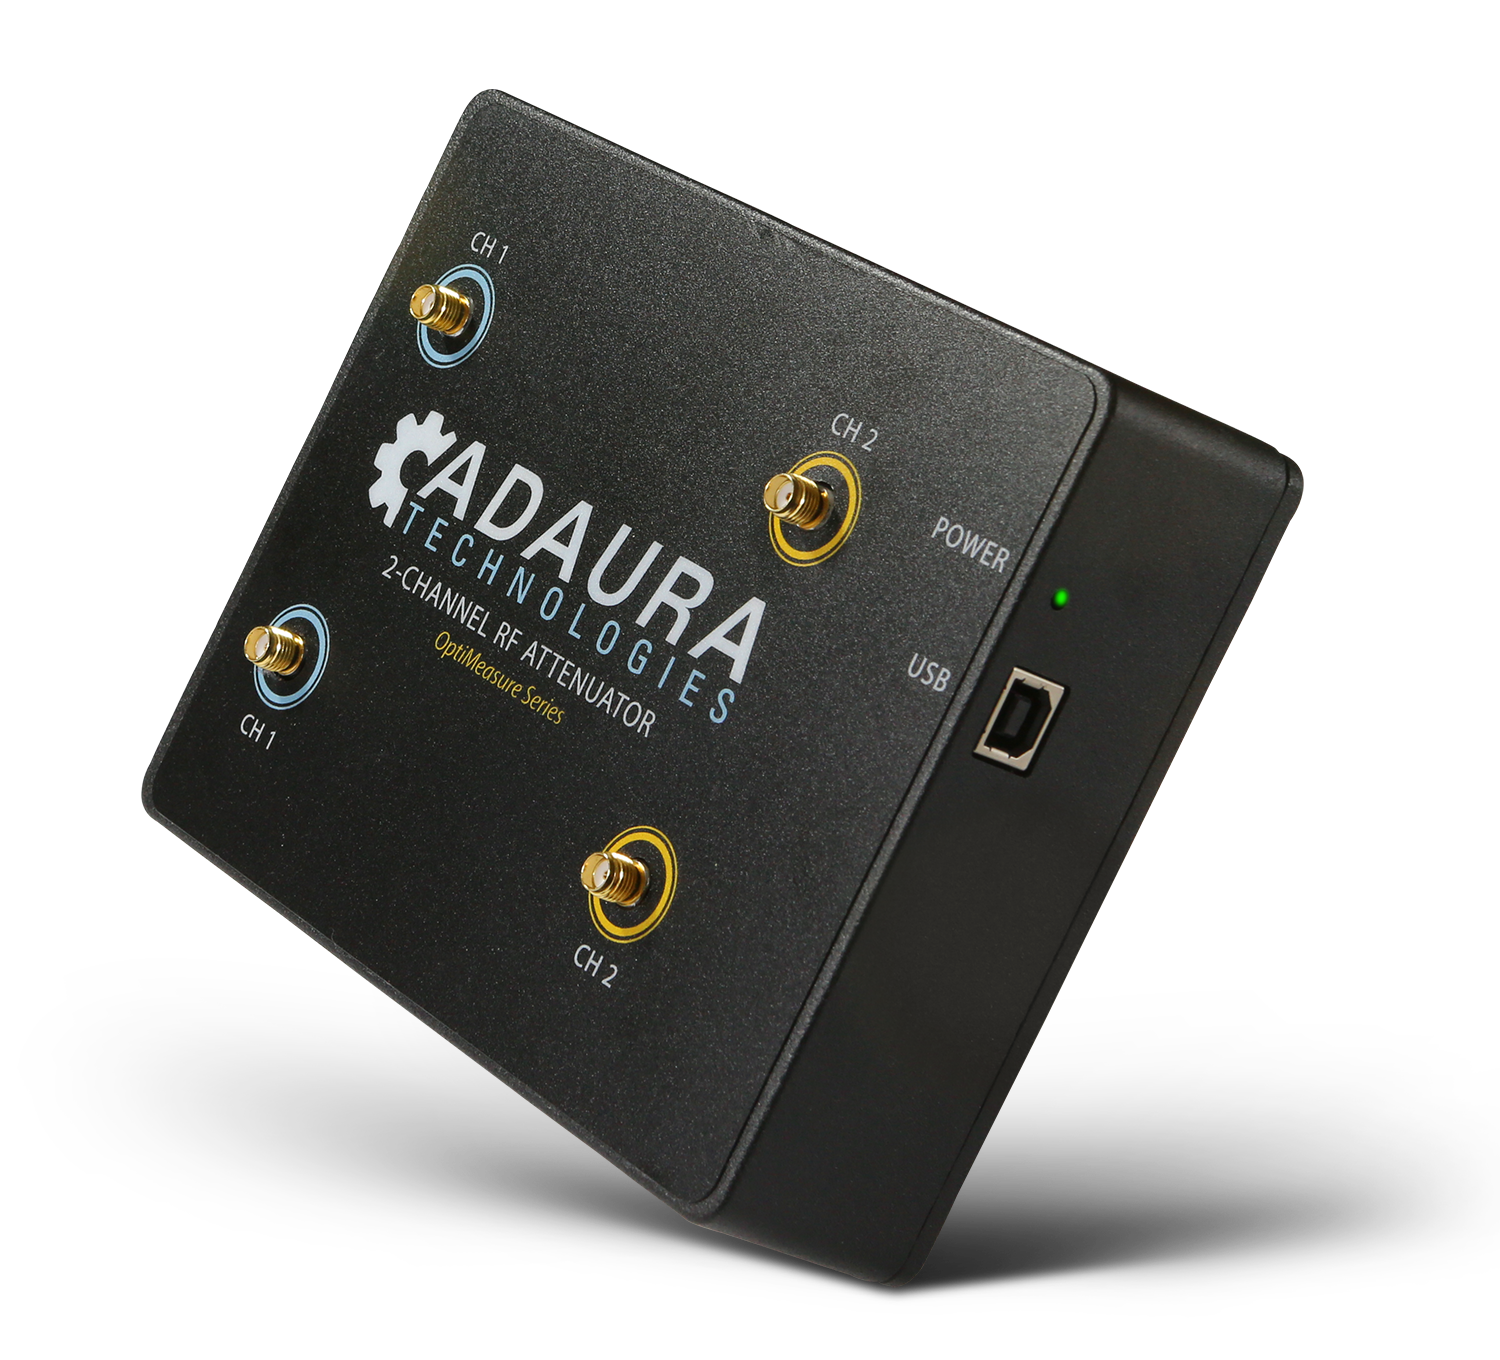 AD-USB2APT5 - AdauraTech Attenuators